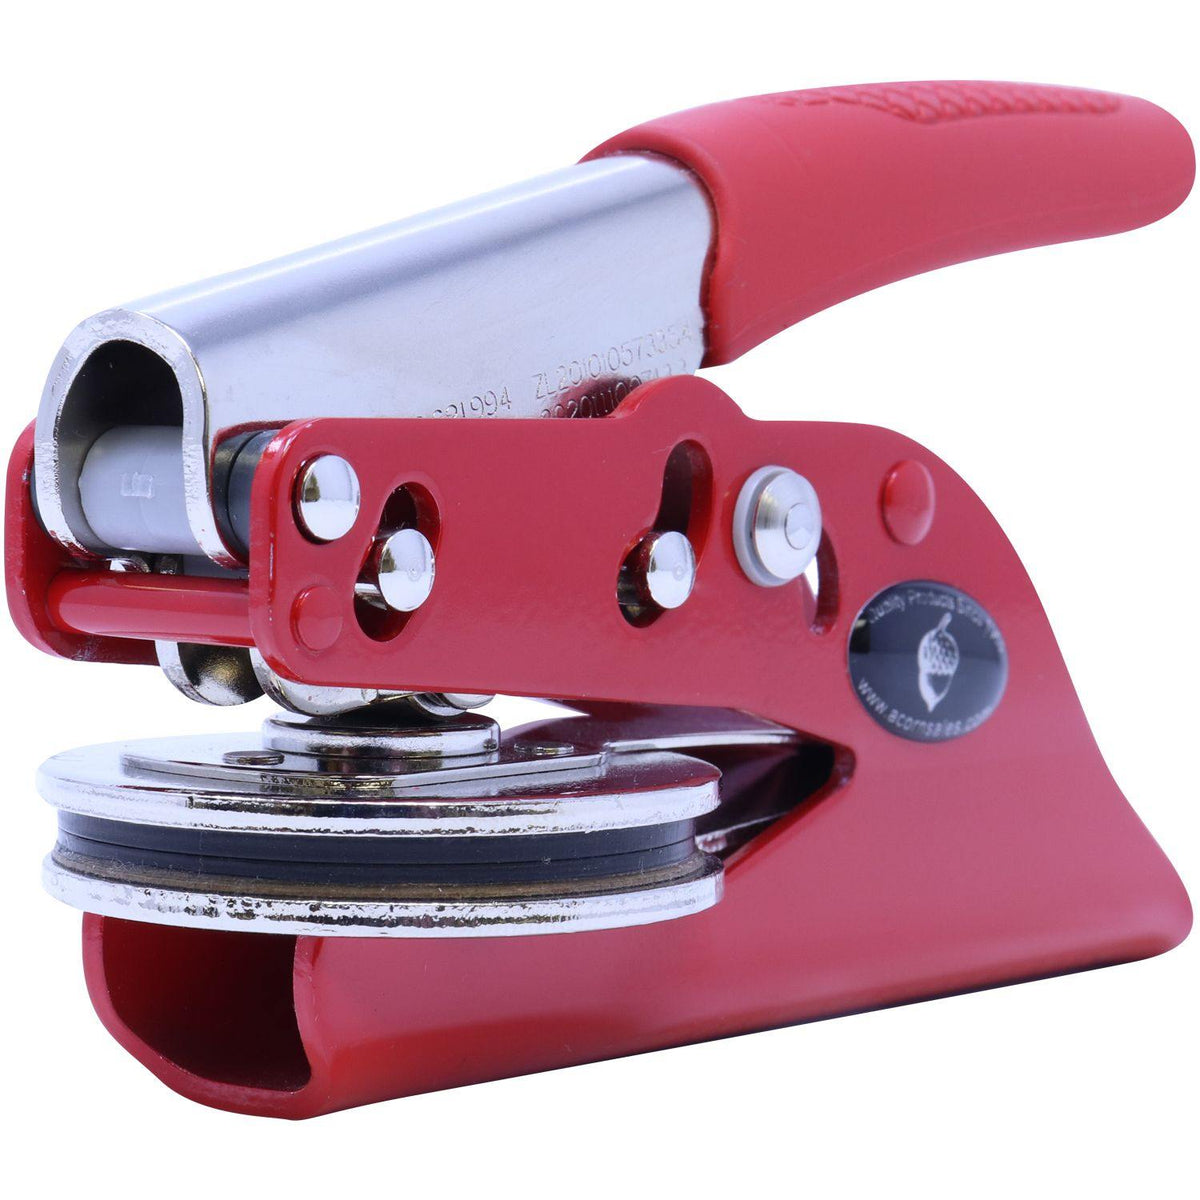 Land Surveyor Red Soft Seal Embosser - Engineer Seal Stamps - Embosser Type_Handheld, Embosser Type_Soft Seal